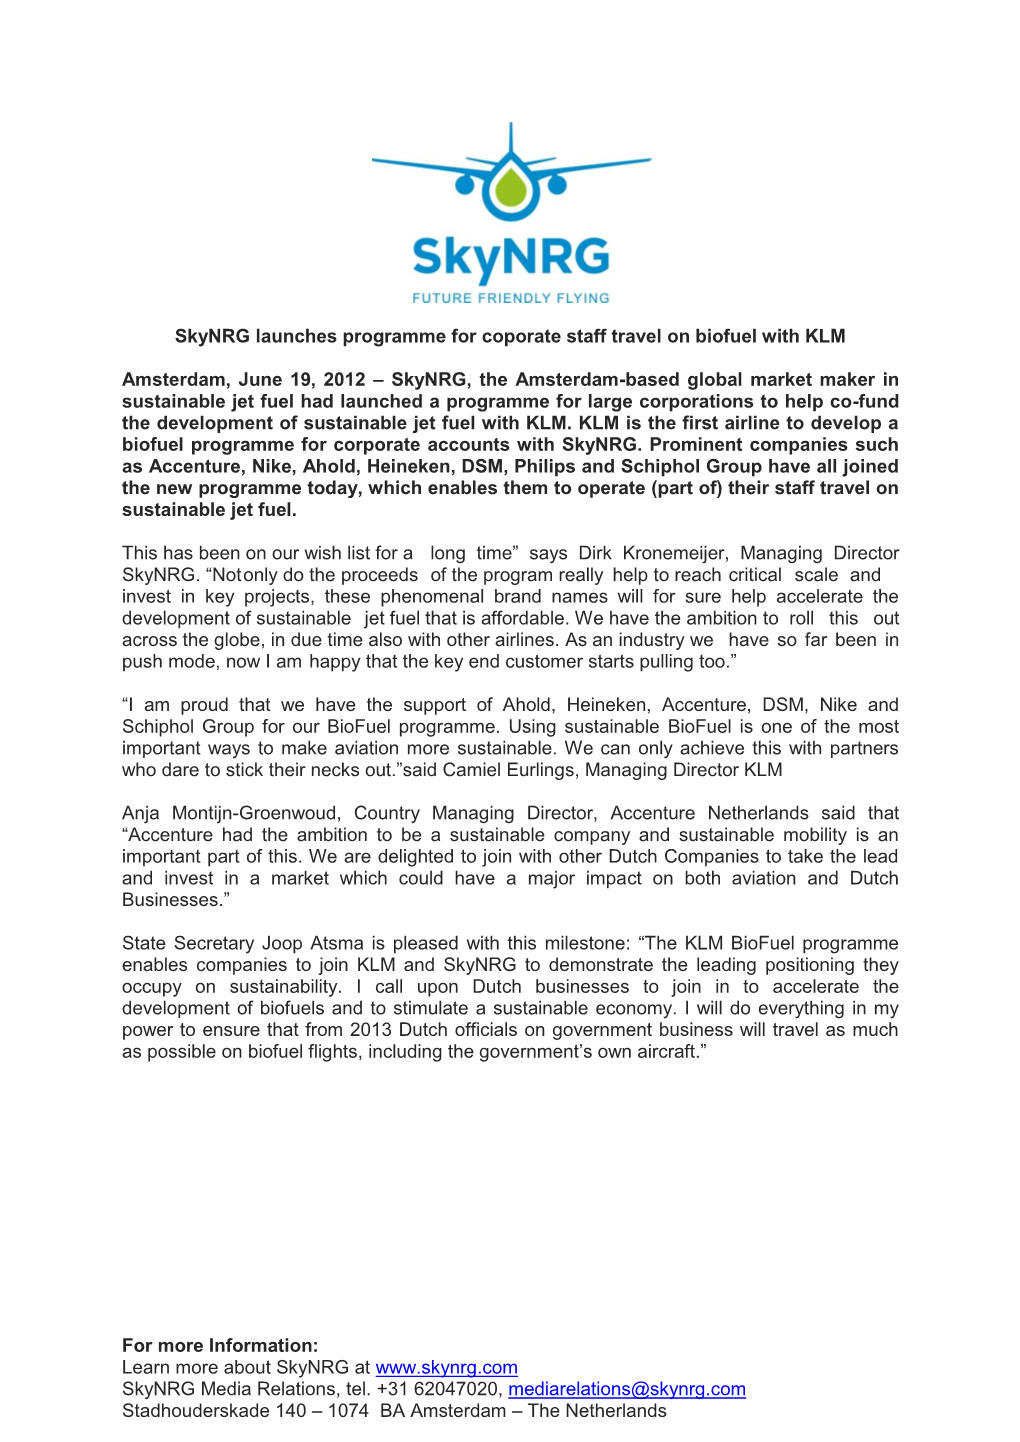 Skynrg Supplies 3 Unique Biofuel Flights to Rio